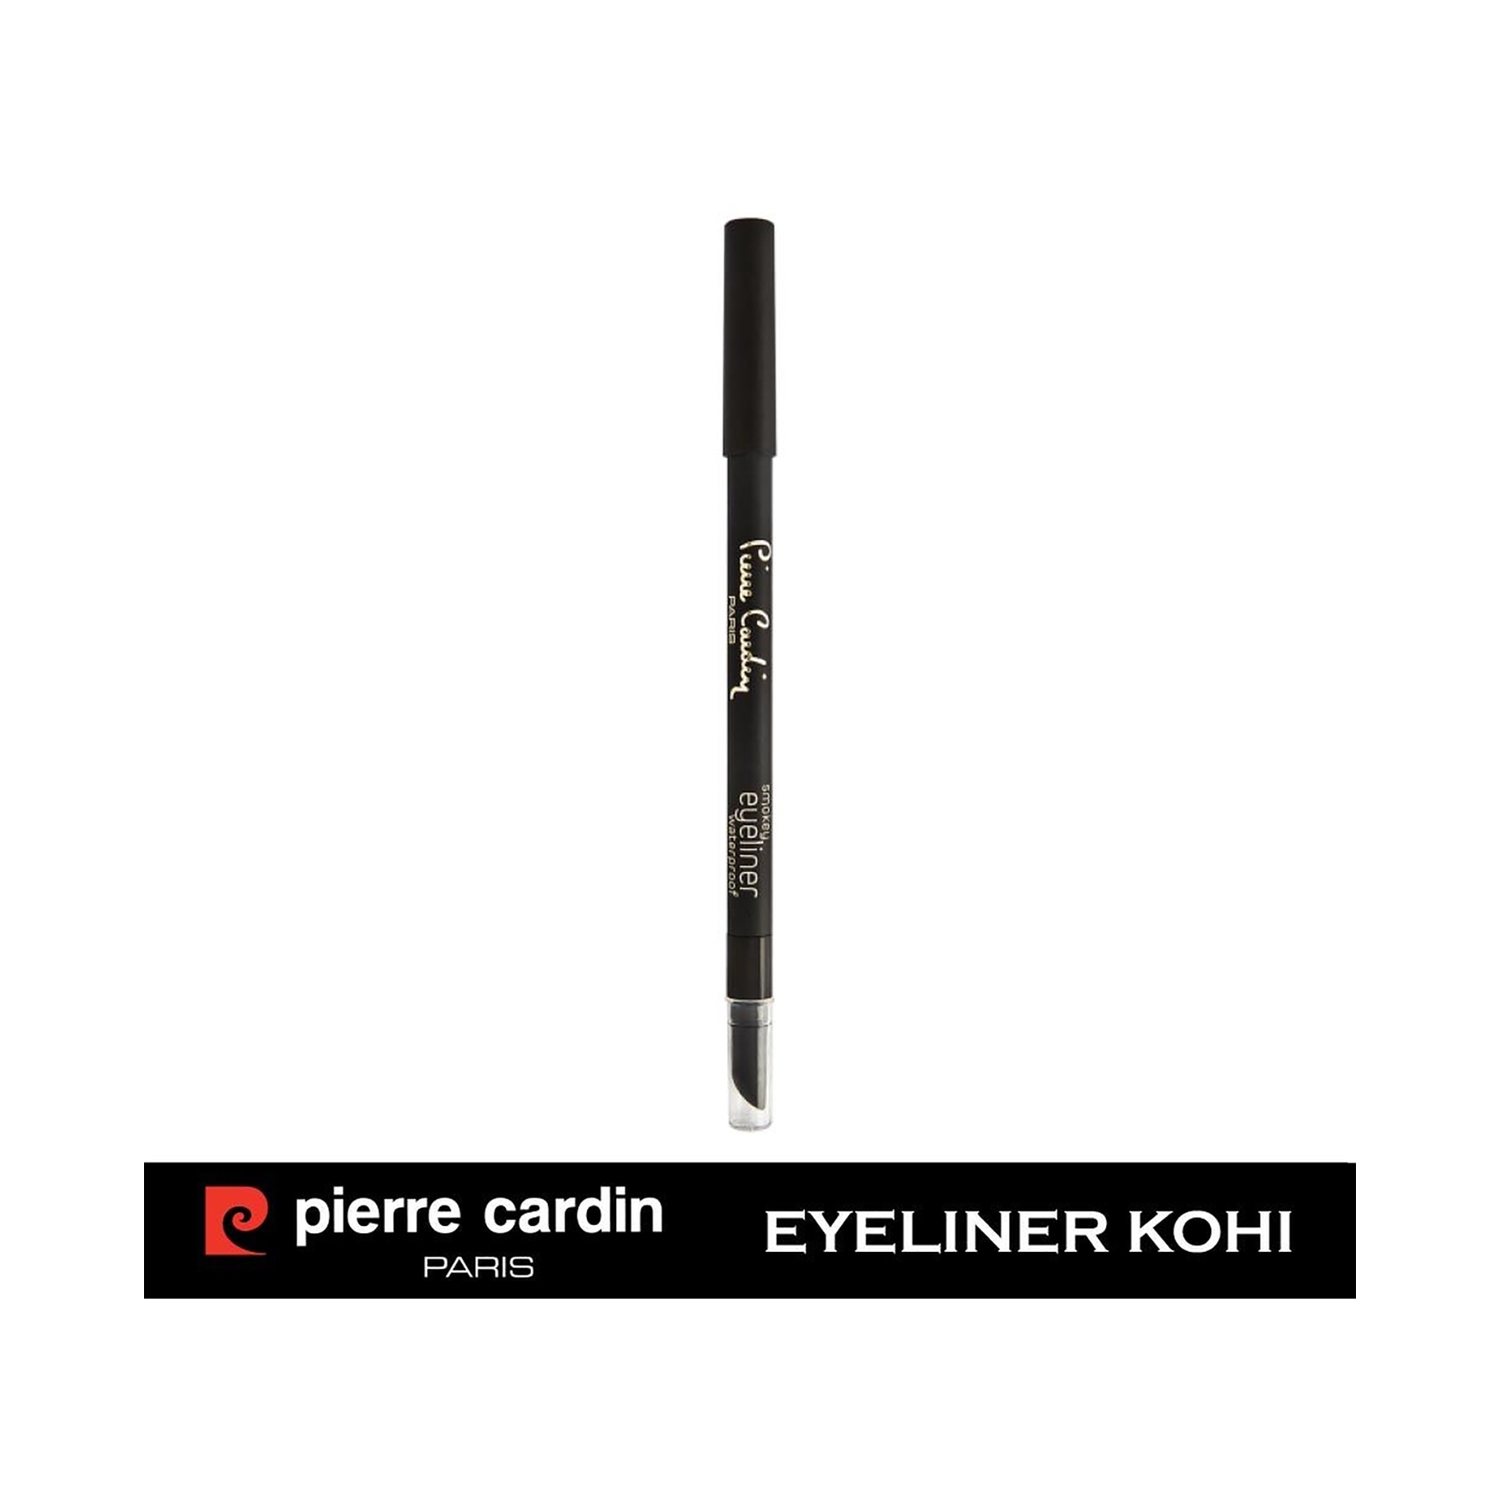 Pierre Cardin Paris | Pierre Cardin Paris Waterproof Smokey Eyeliner - Black (1.2g)